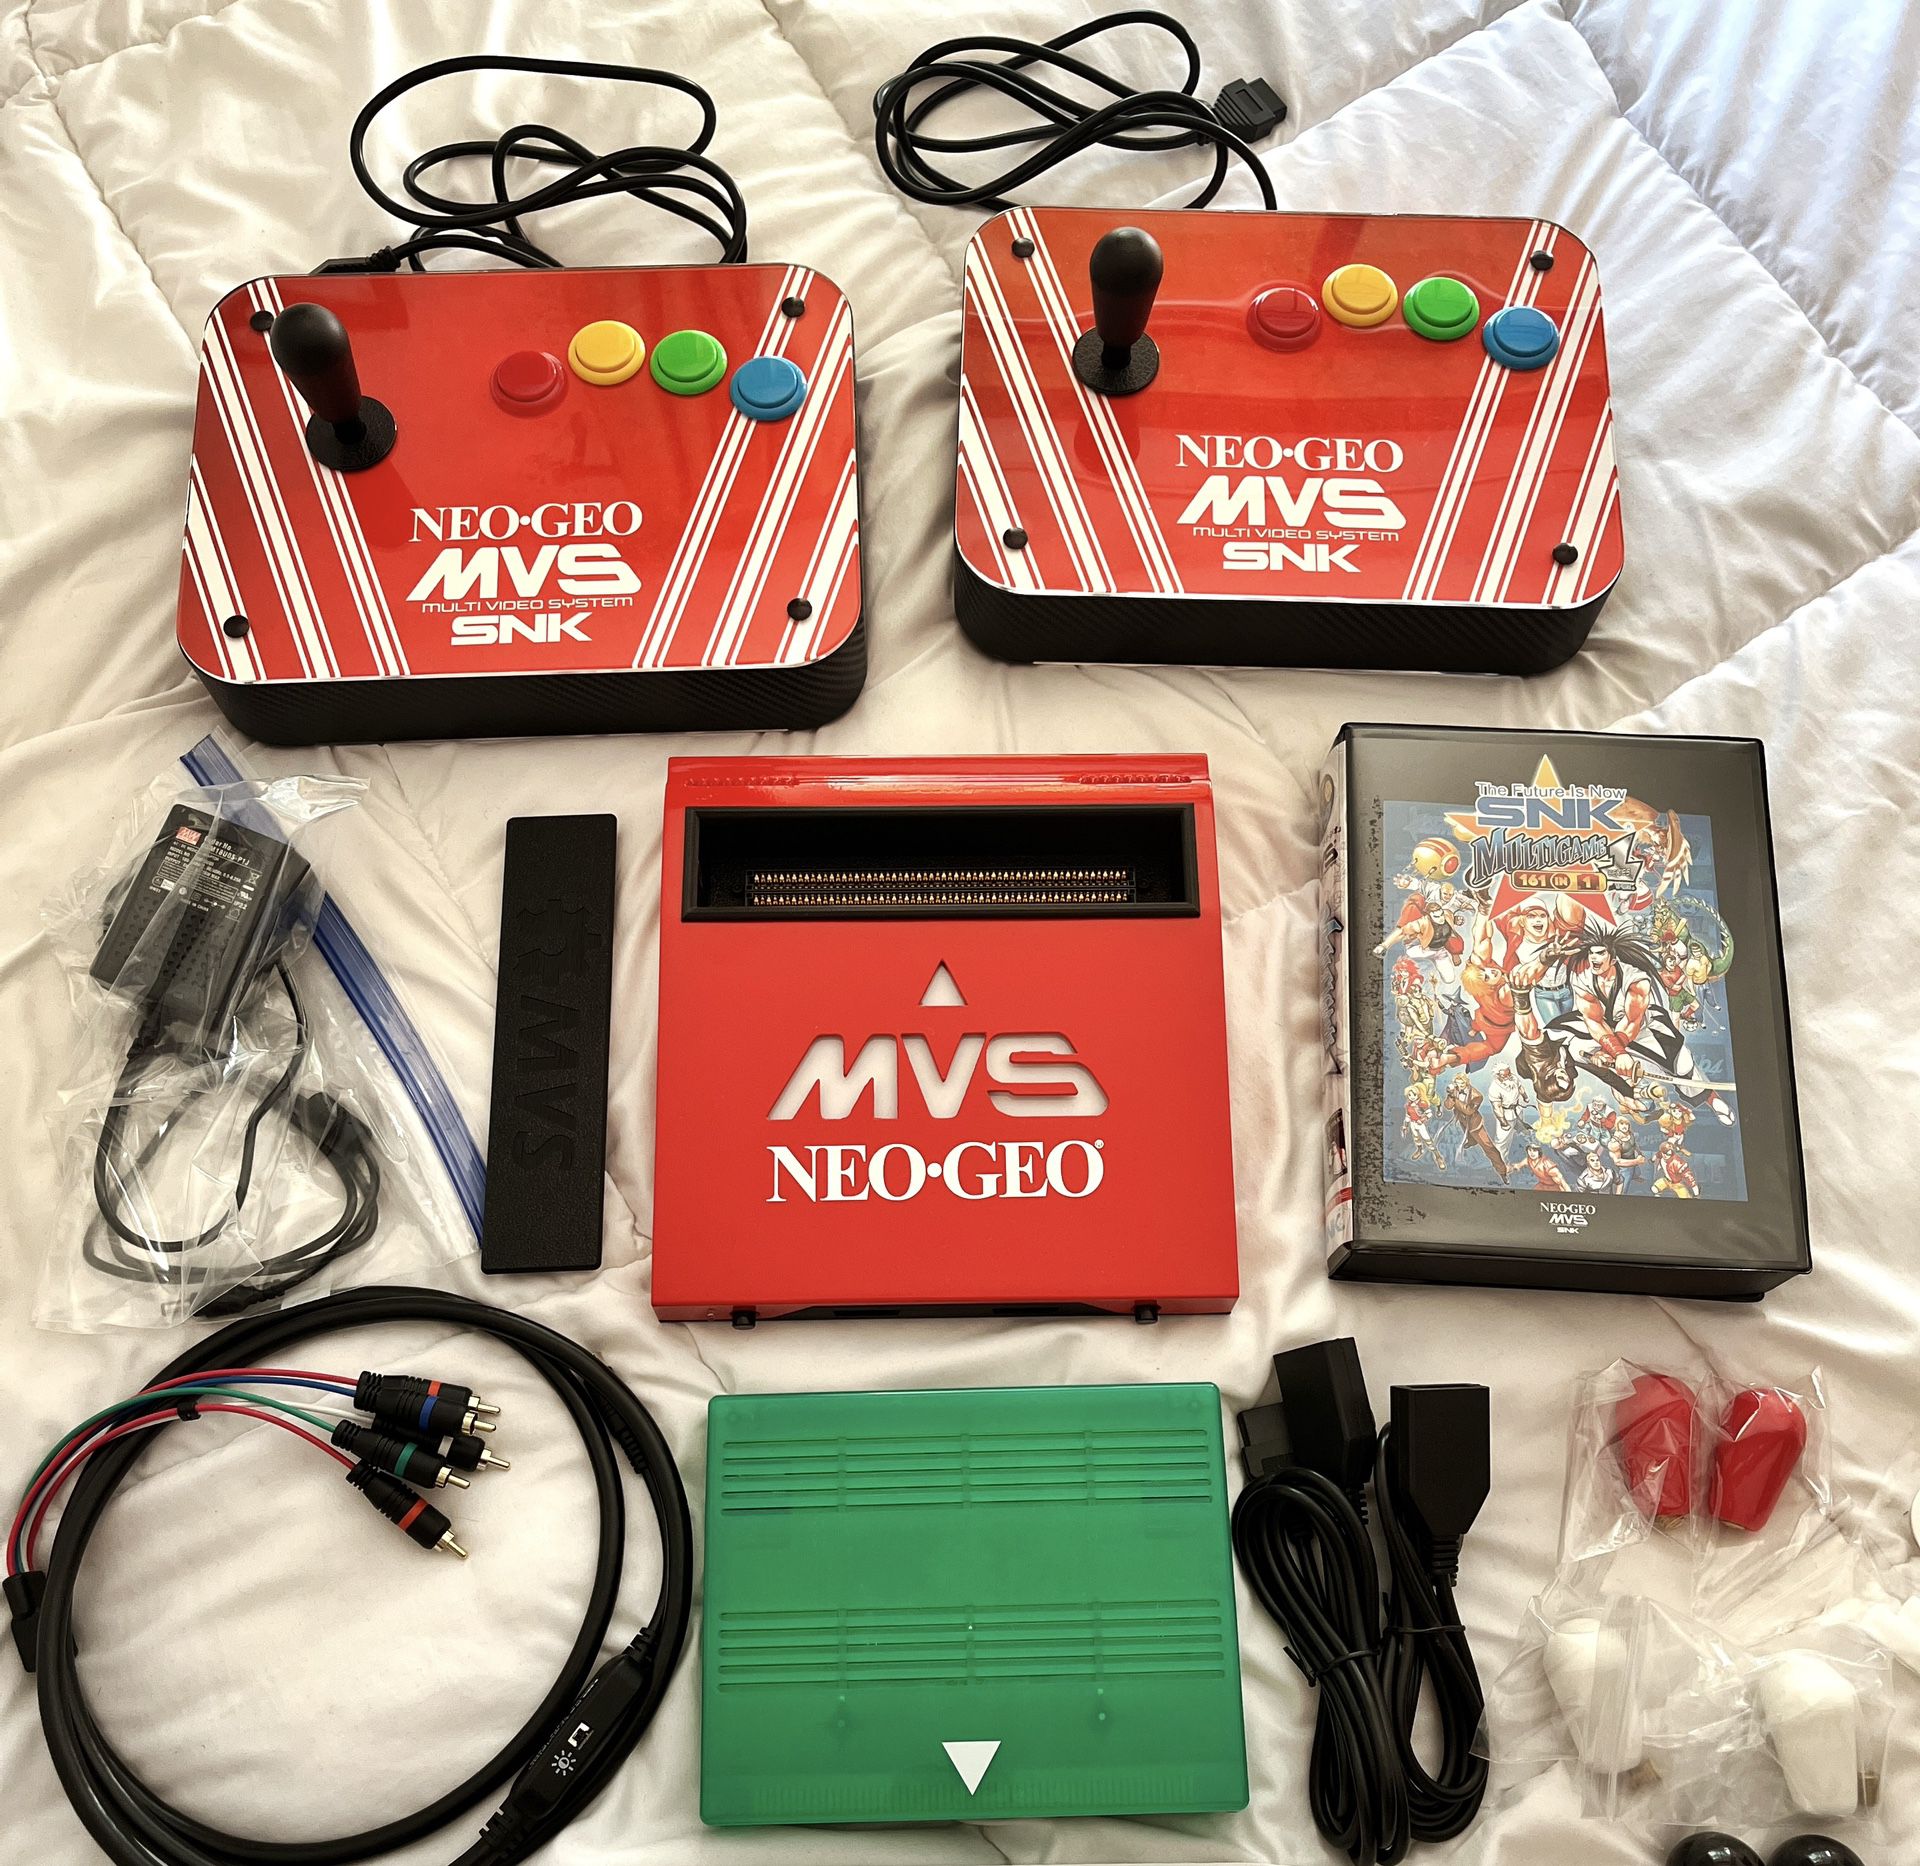 Neo Geo SNK OMVS consolized MVS Bundle with Custom Arcade Sticks